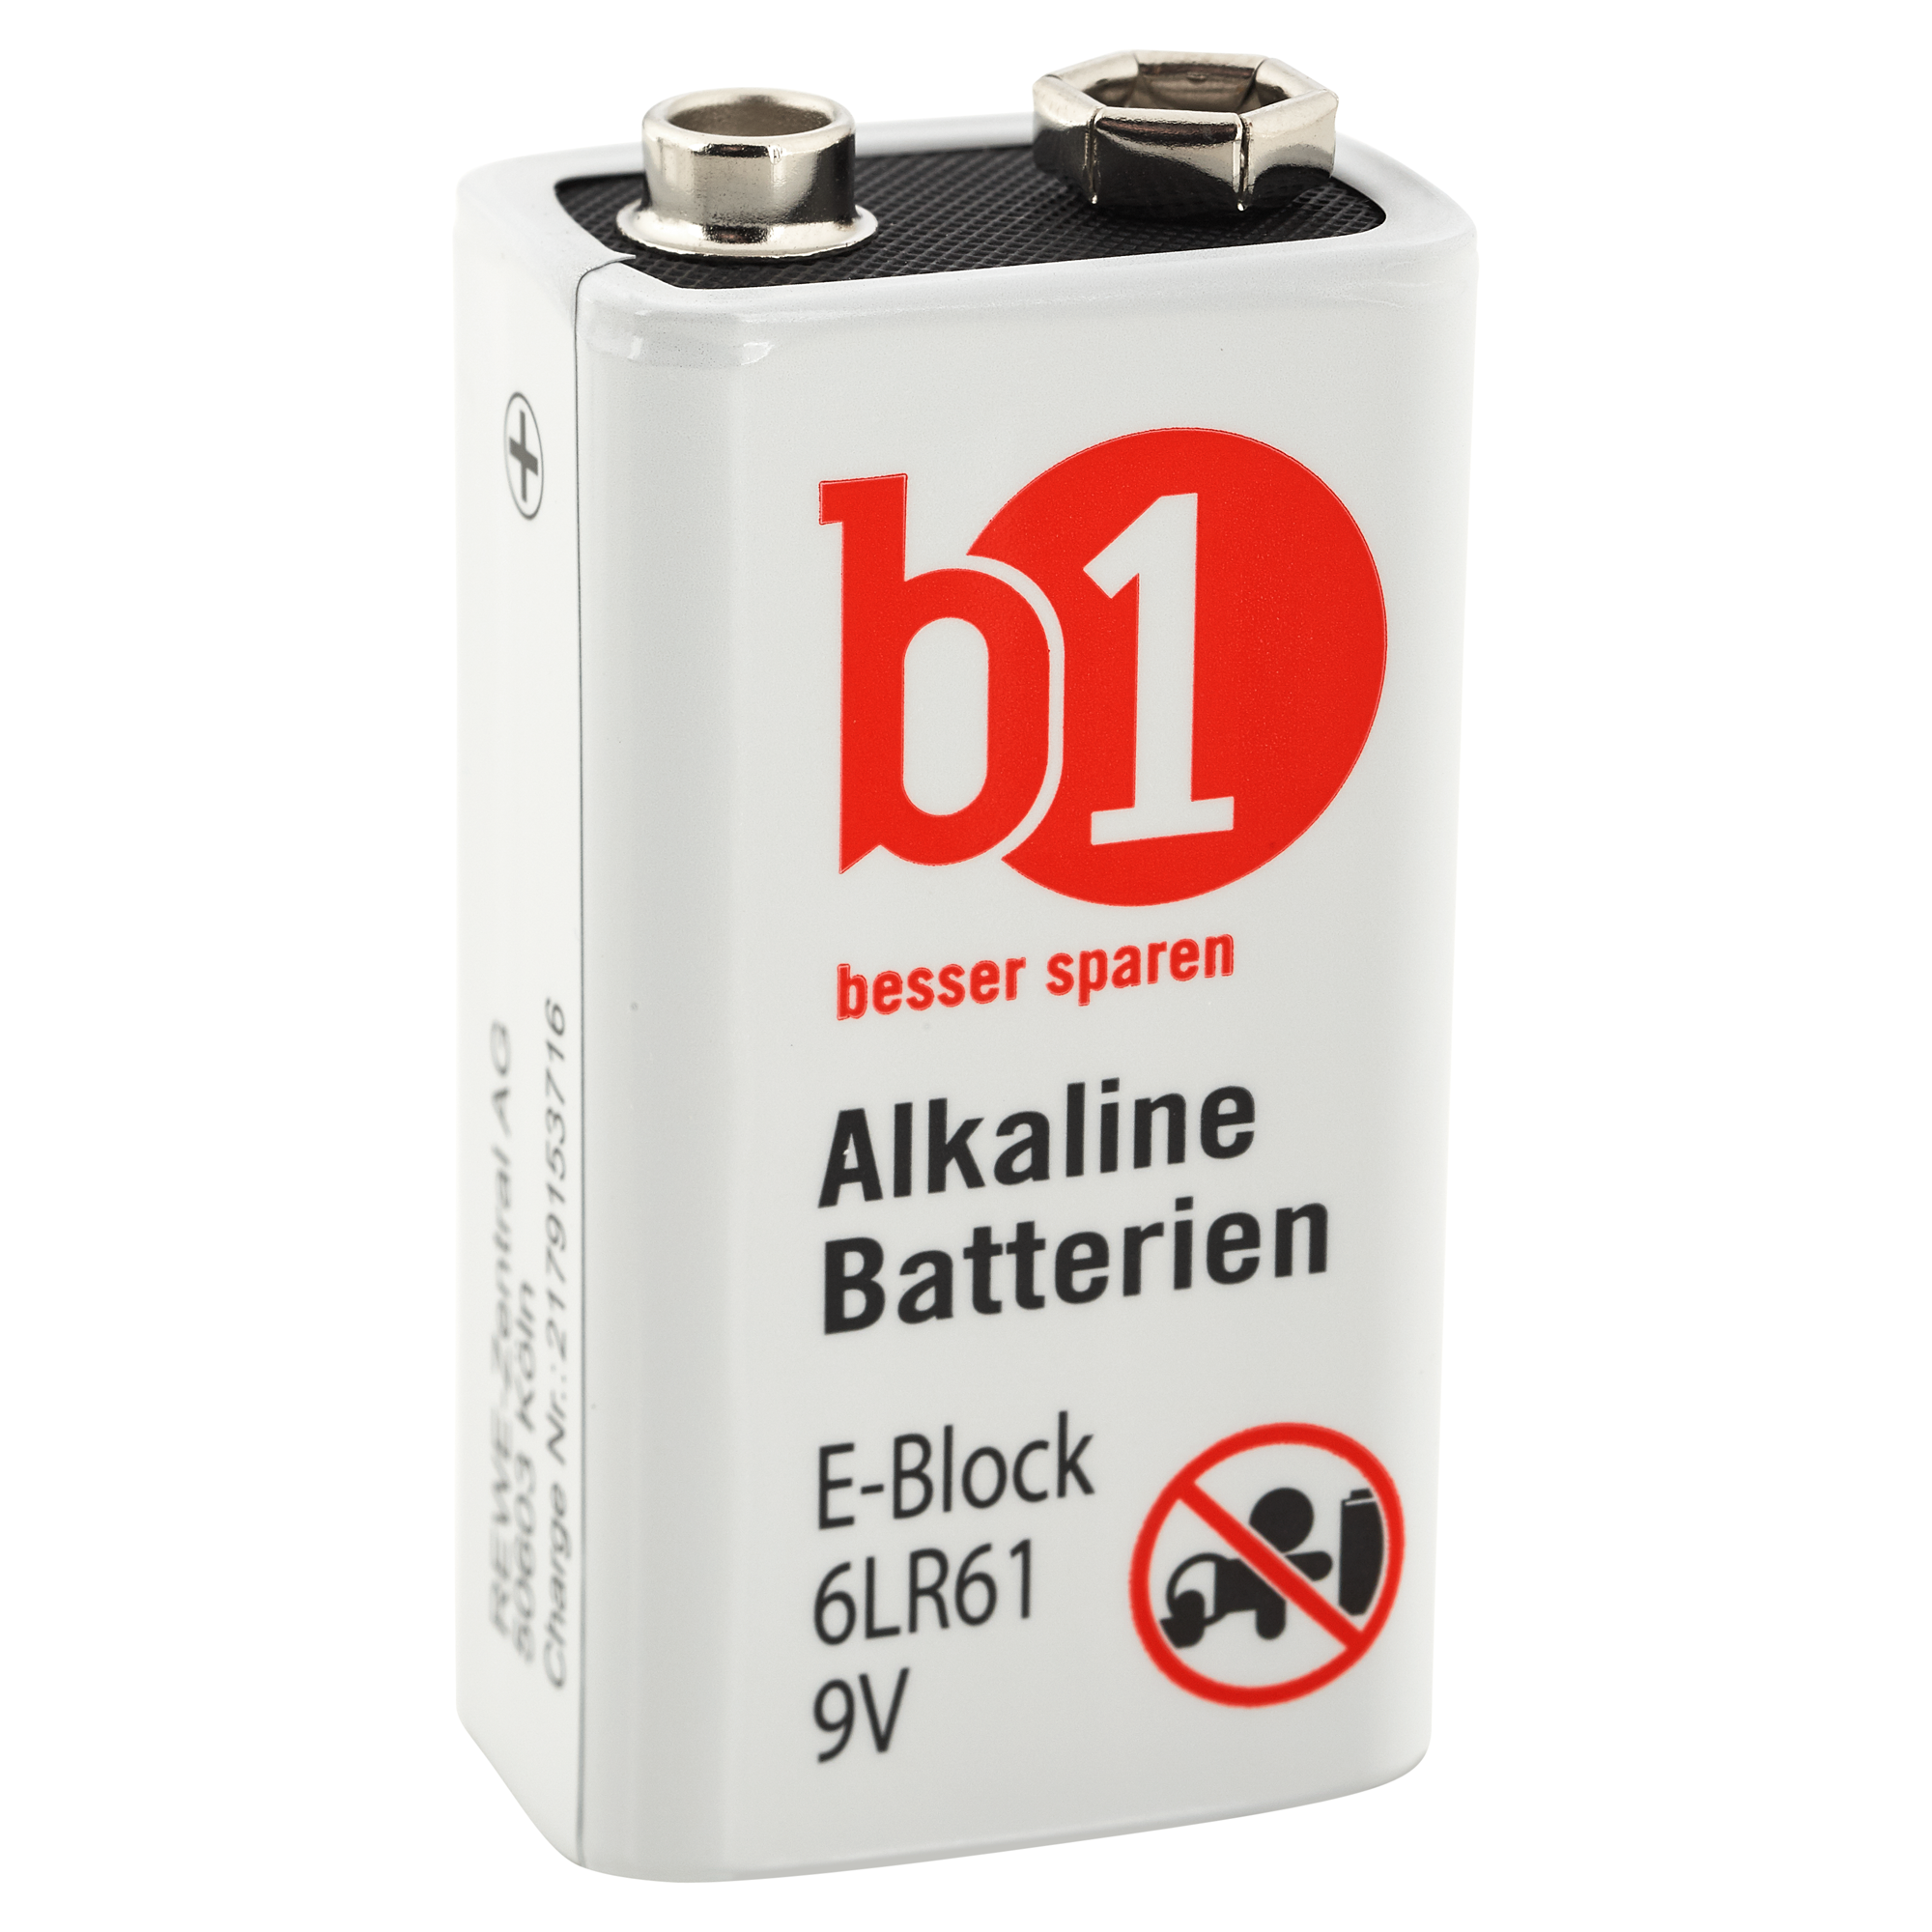 E-Block-Batterien 6LR61 9 V, 2 Stück + product picture